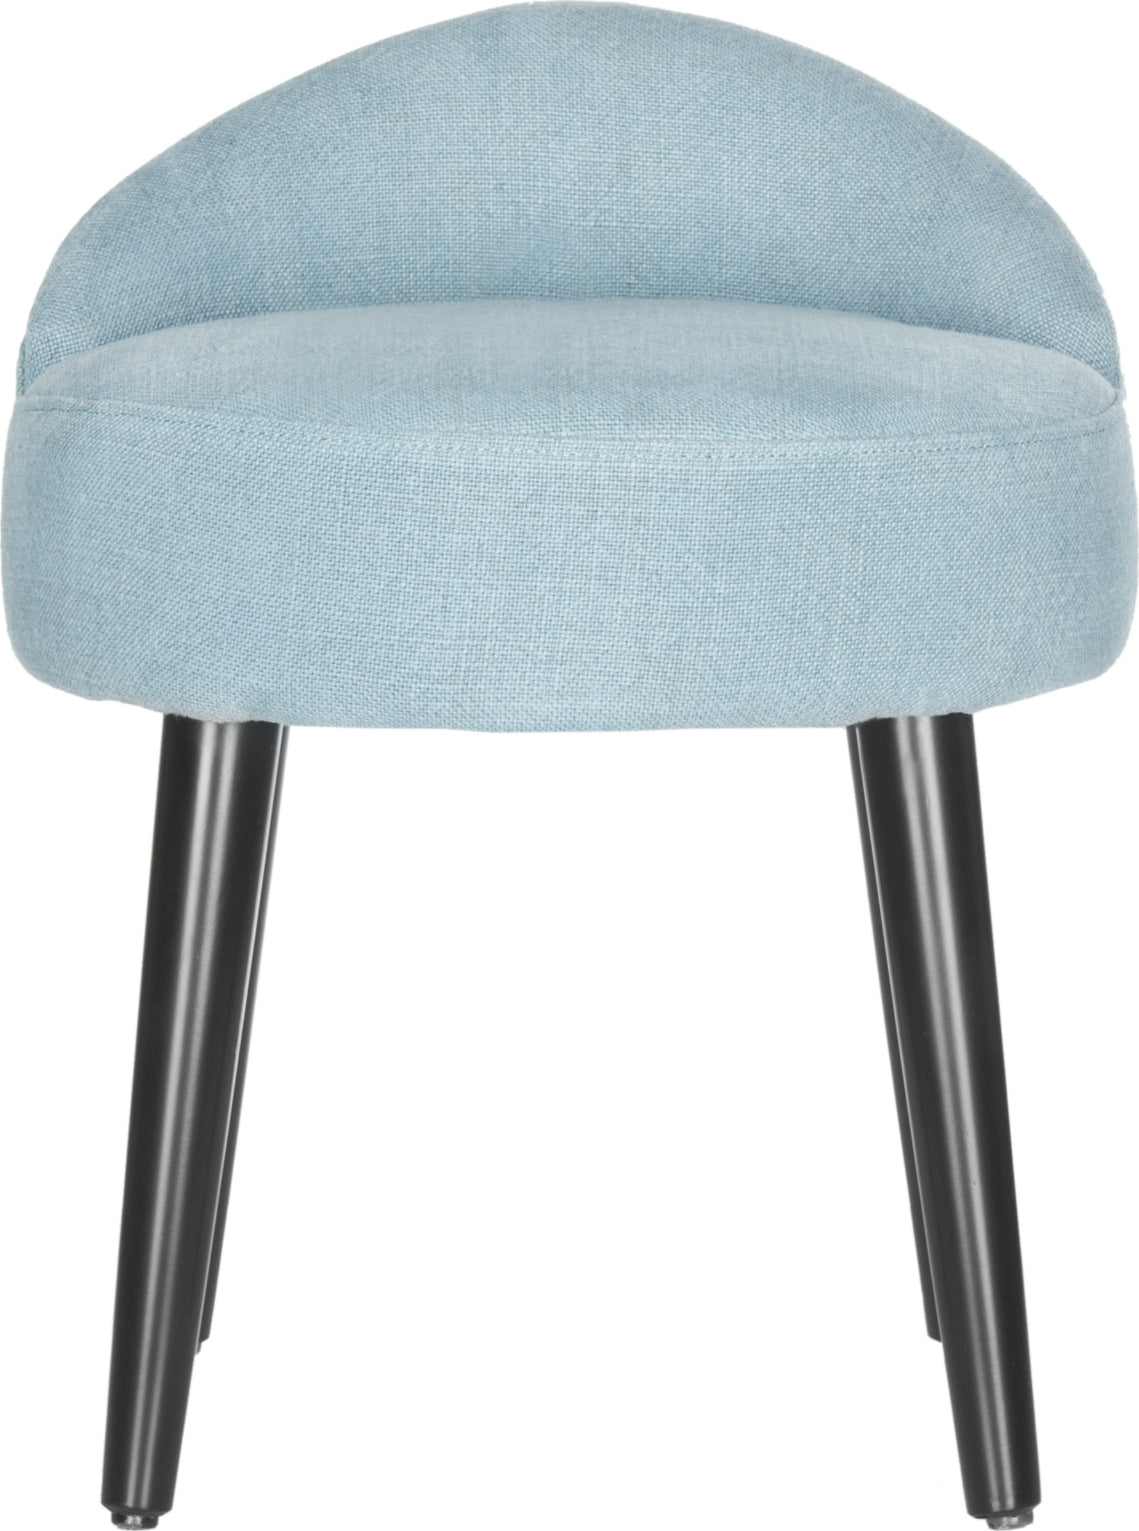 Safavieh Brinda Vanity Chair Light Blue and Black Furniture main image